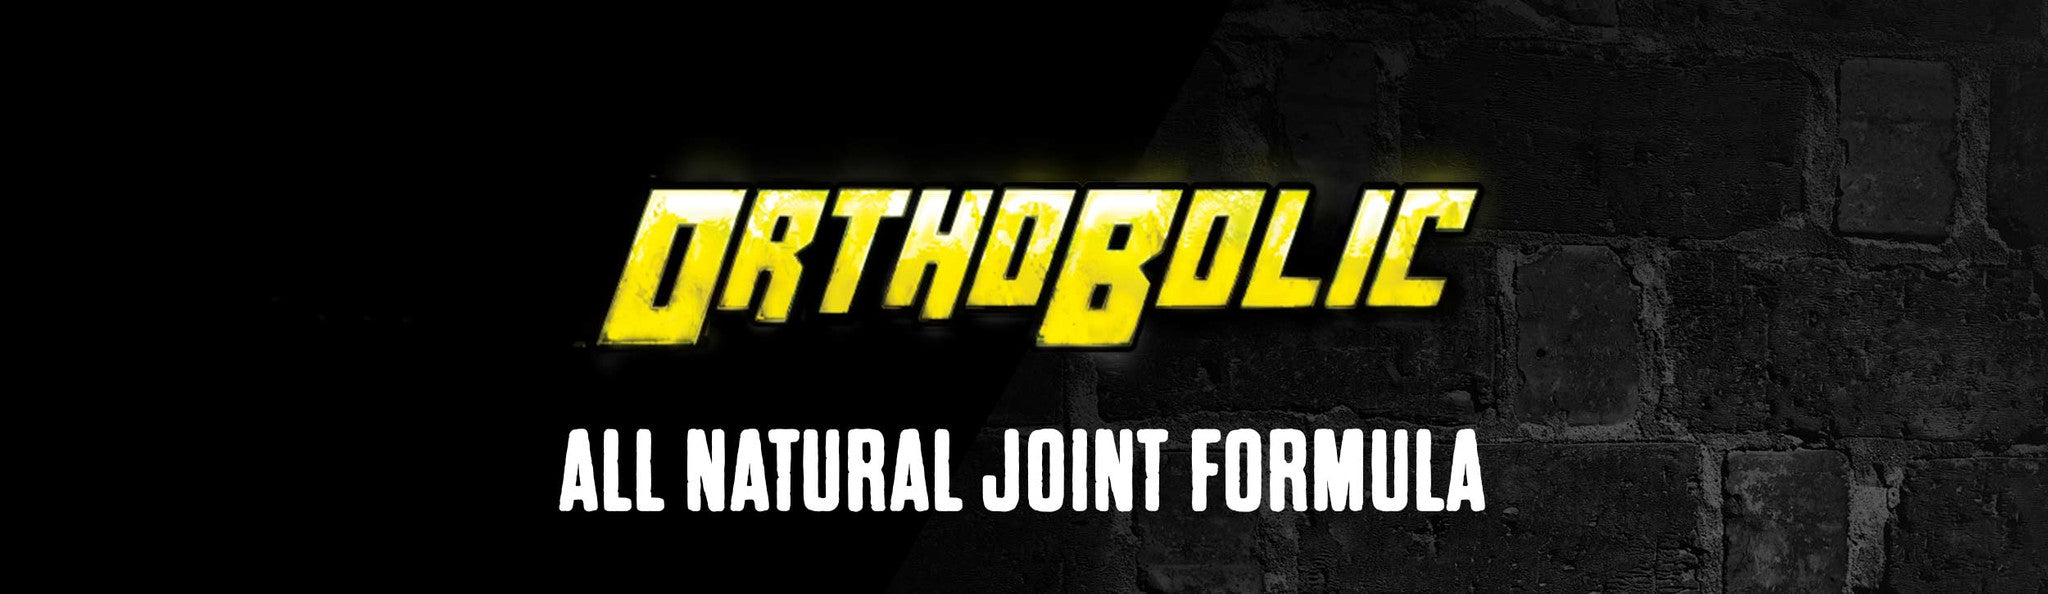 OrthoBolic Title Banner